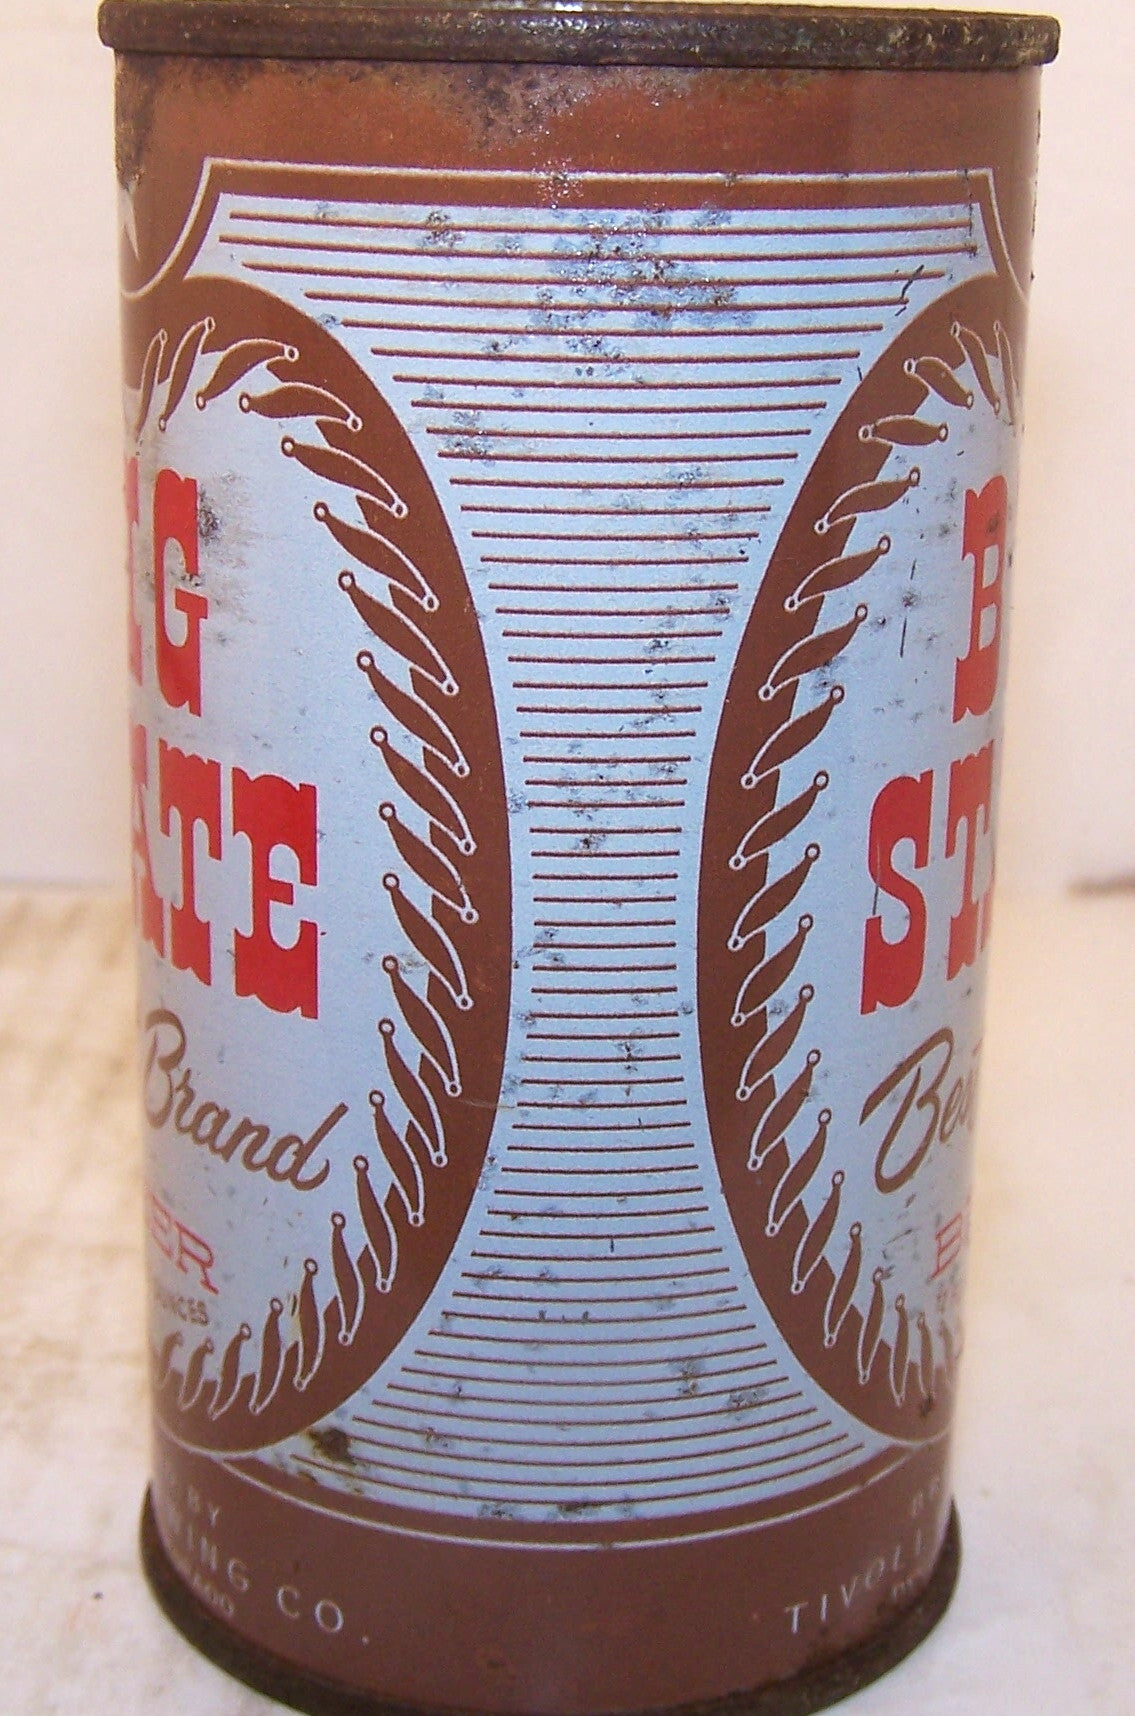 Big State Best Brand Beer, USBC 37-10, Grade 2+